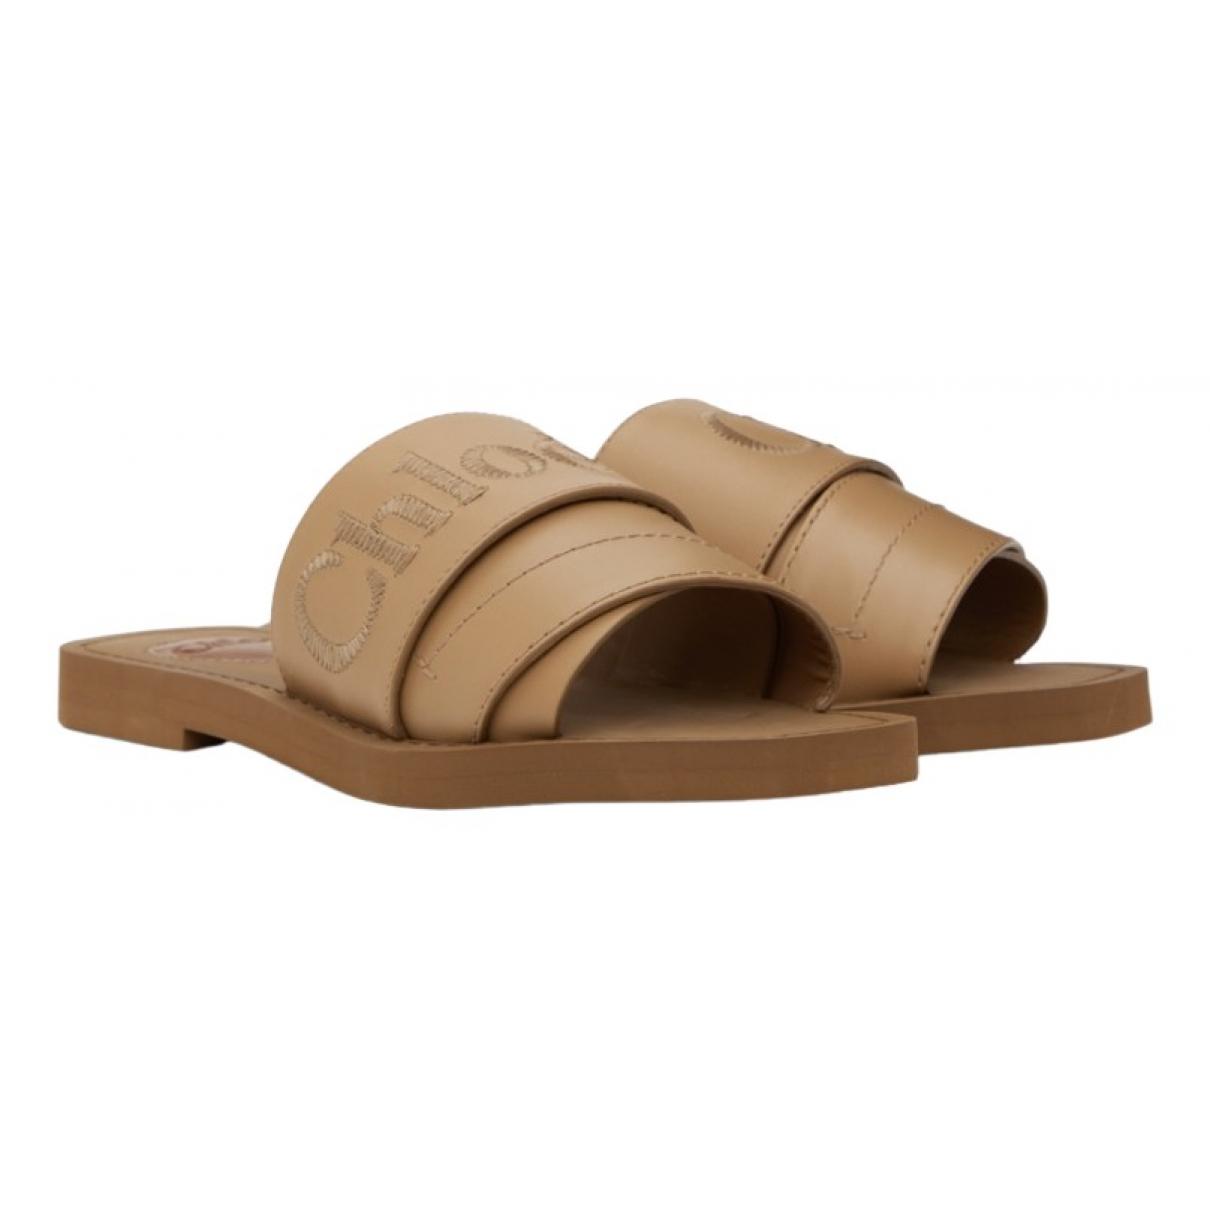 Leather sandal - 1